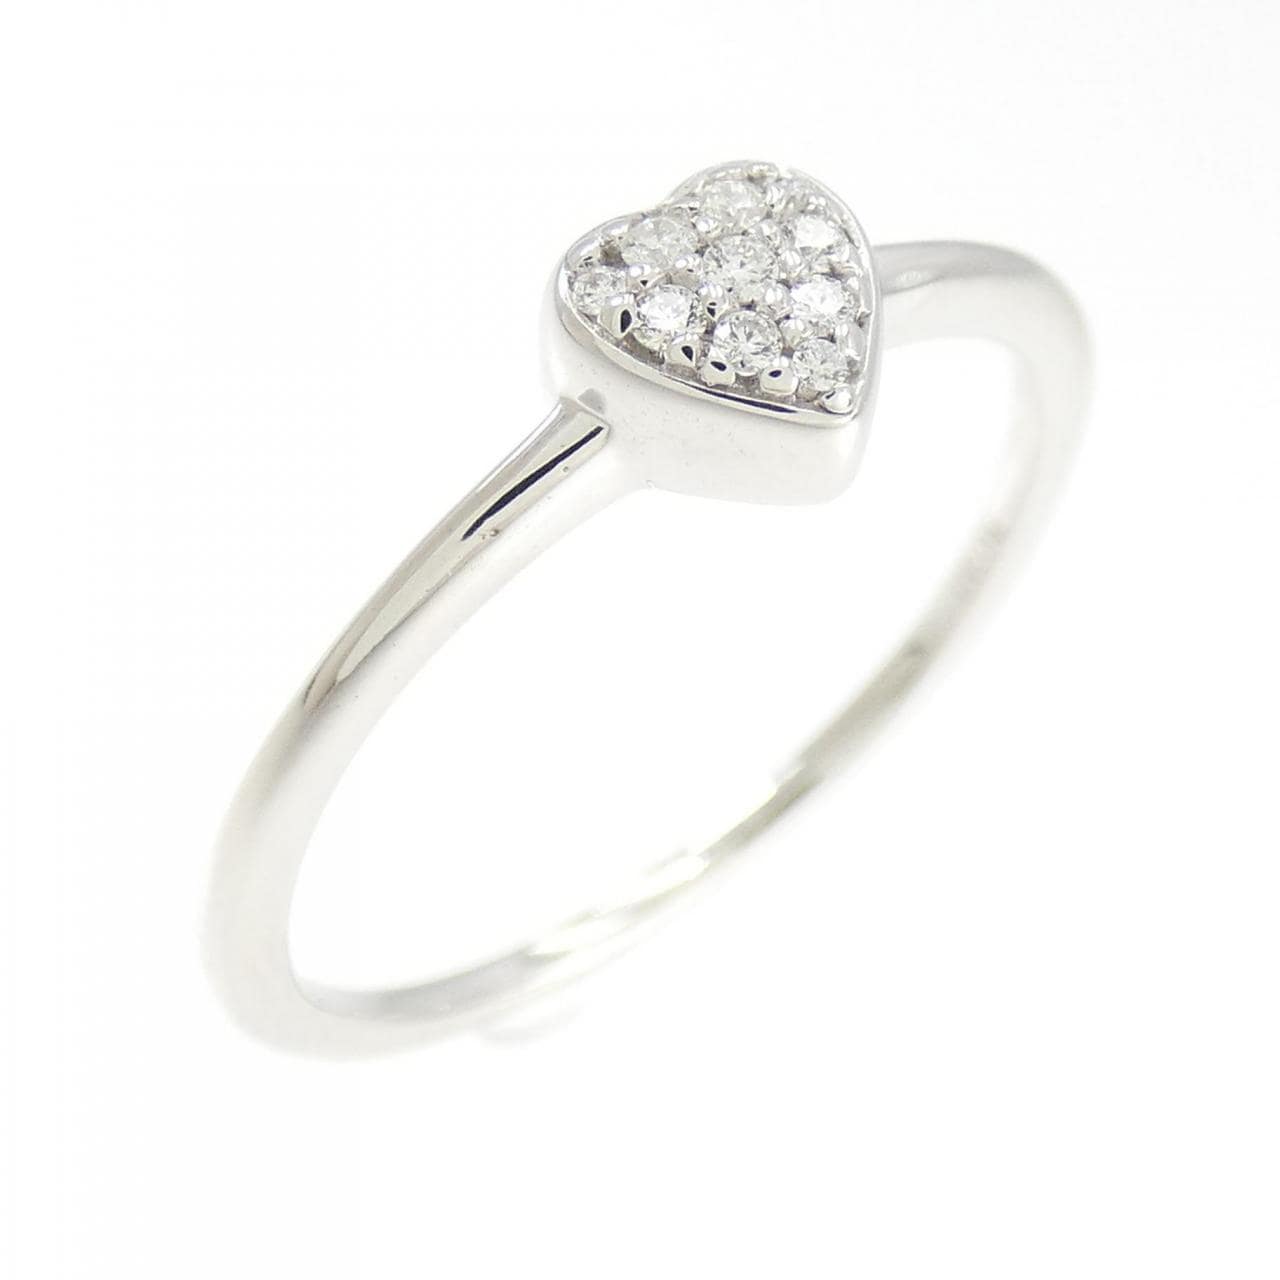 K10WG Heart Diamond Ring 0.04CT